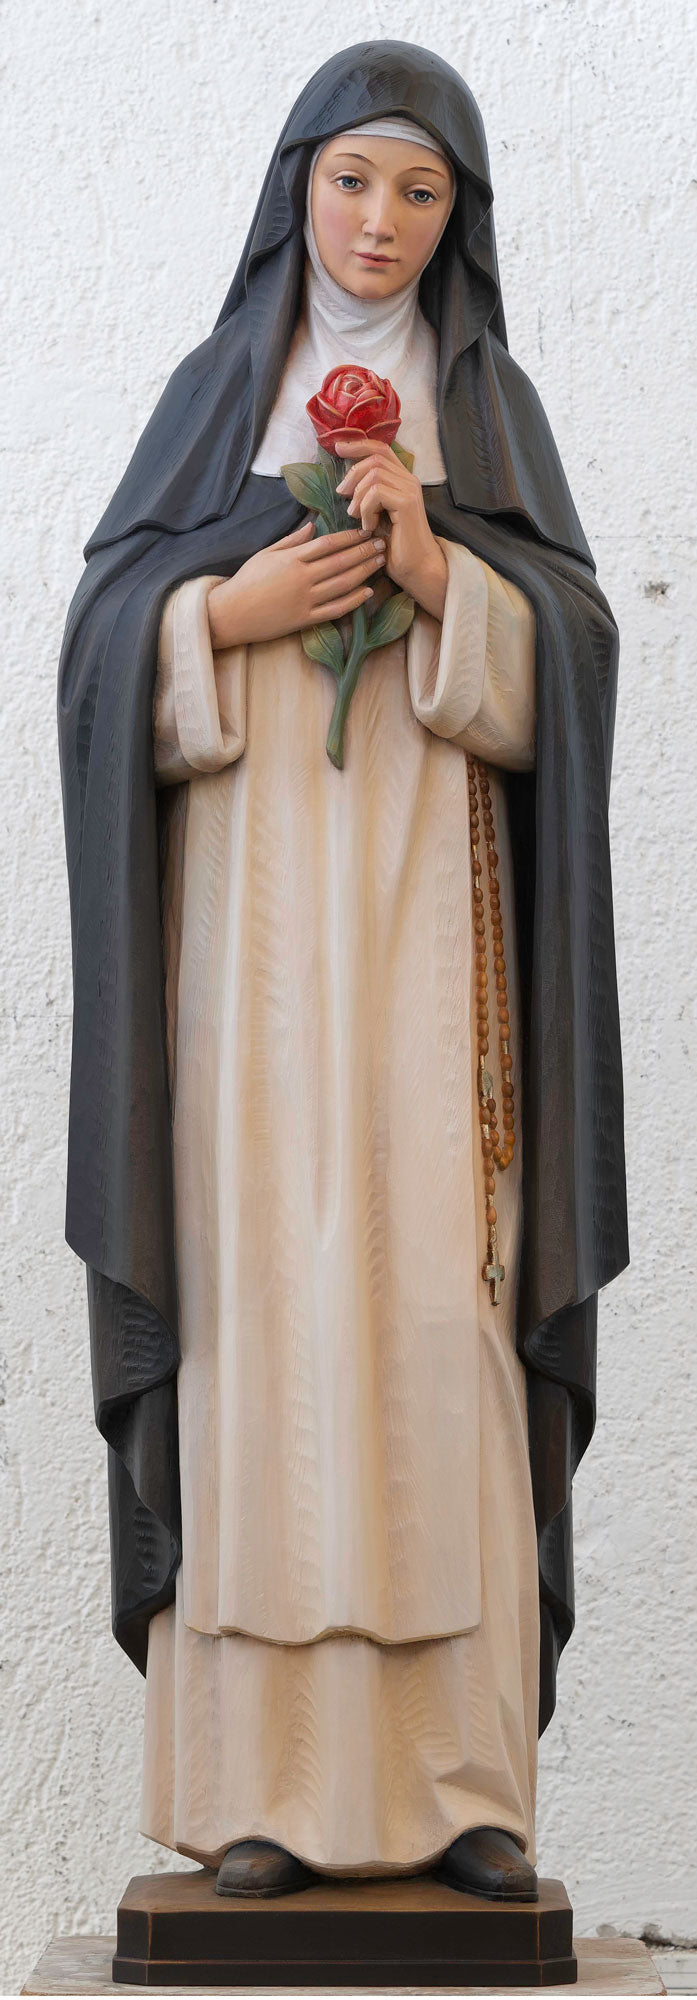 st-rose-of-lima-statue-856-4.jpg